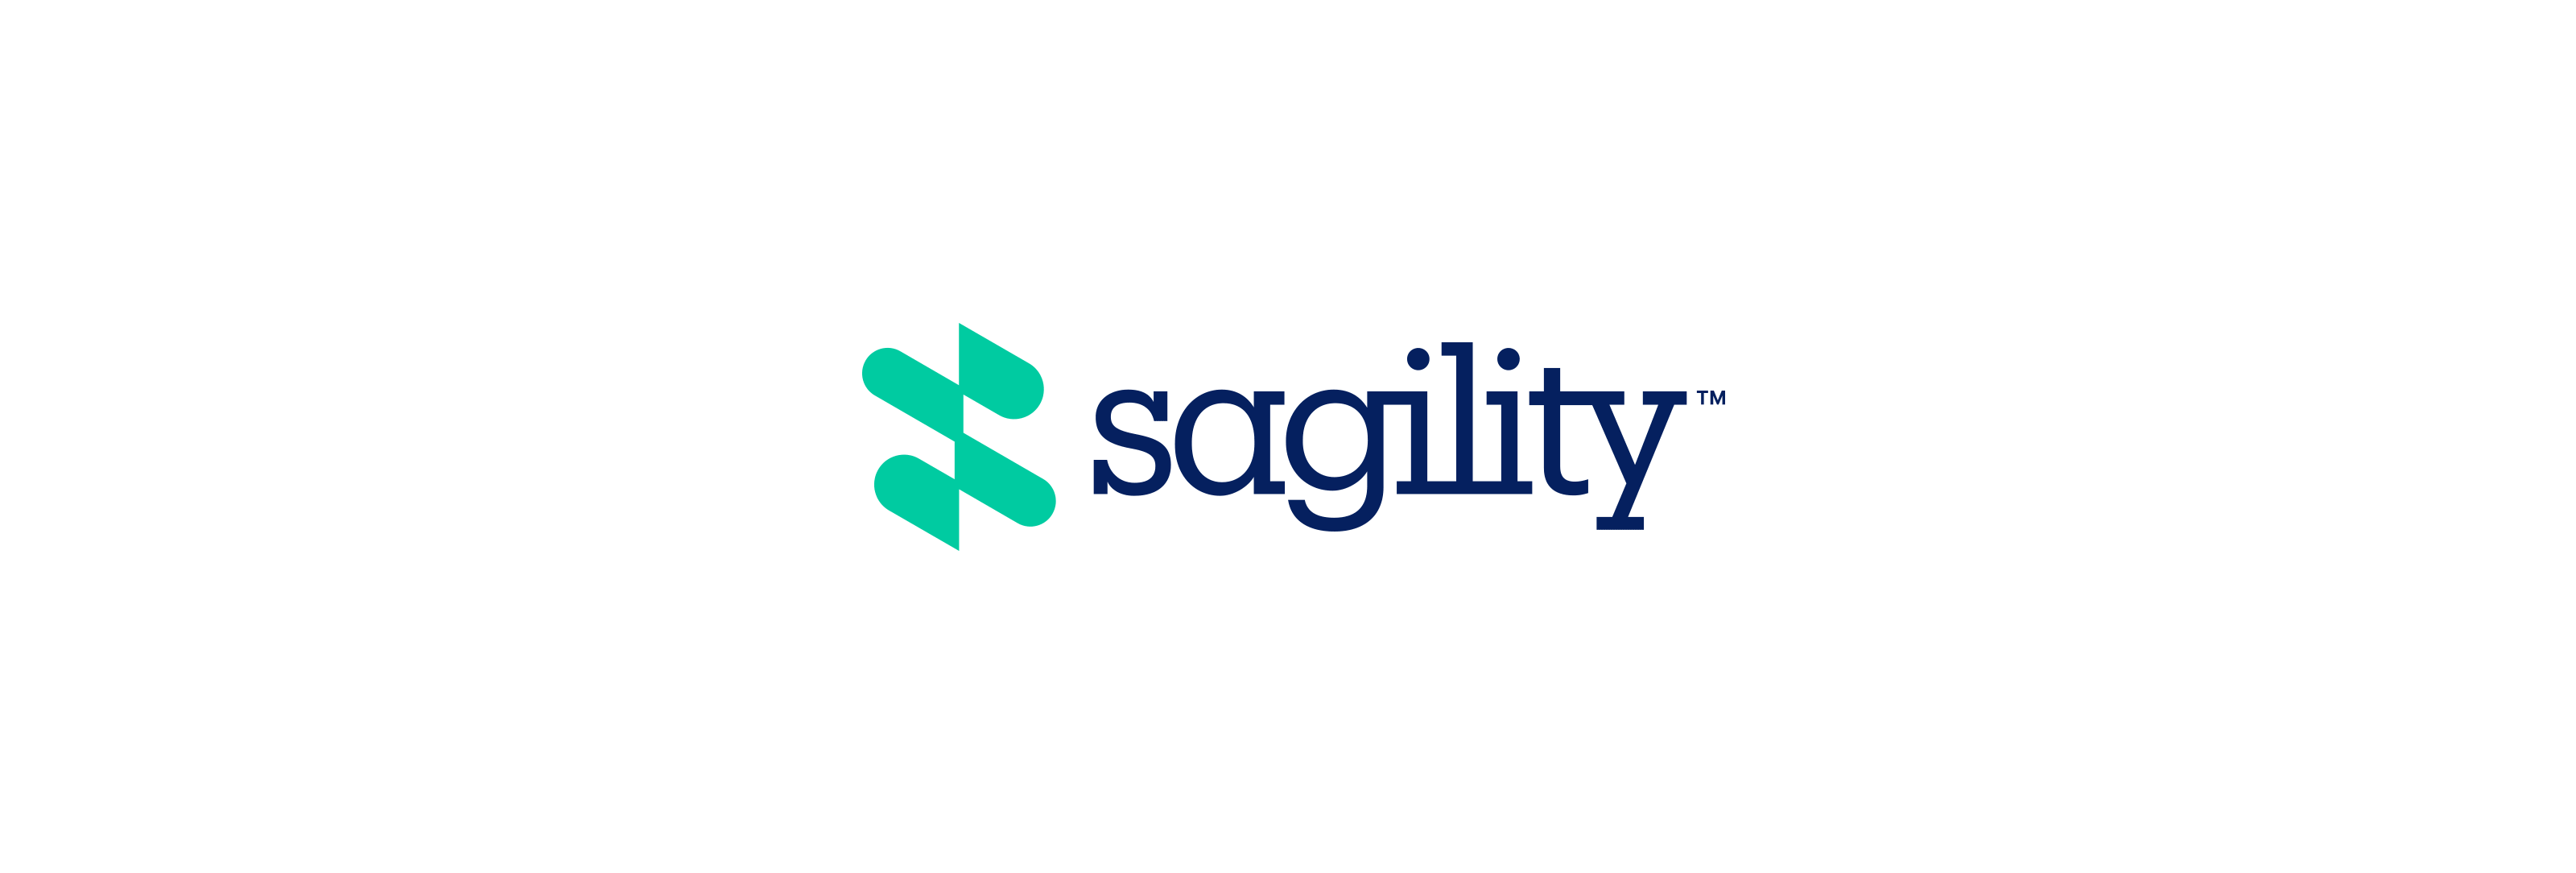 saglility-animate-reveal